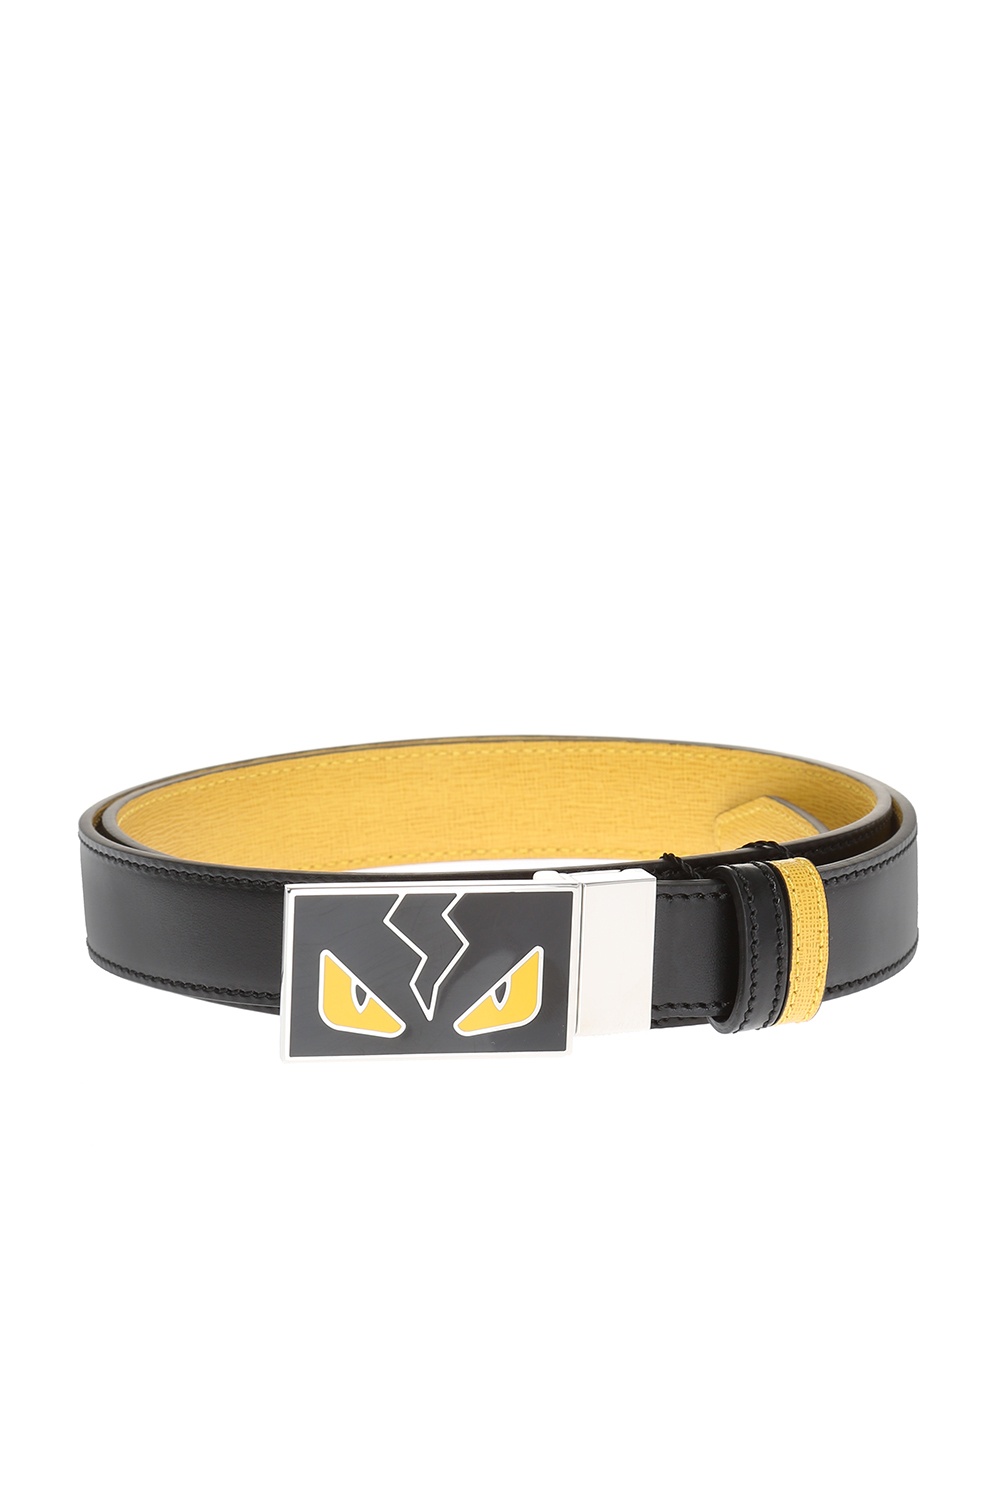 black and yellow fendi belt